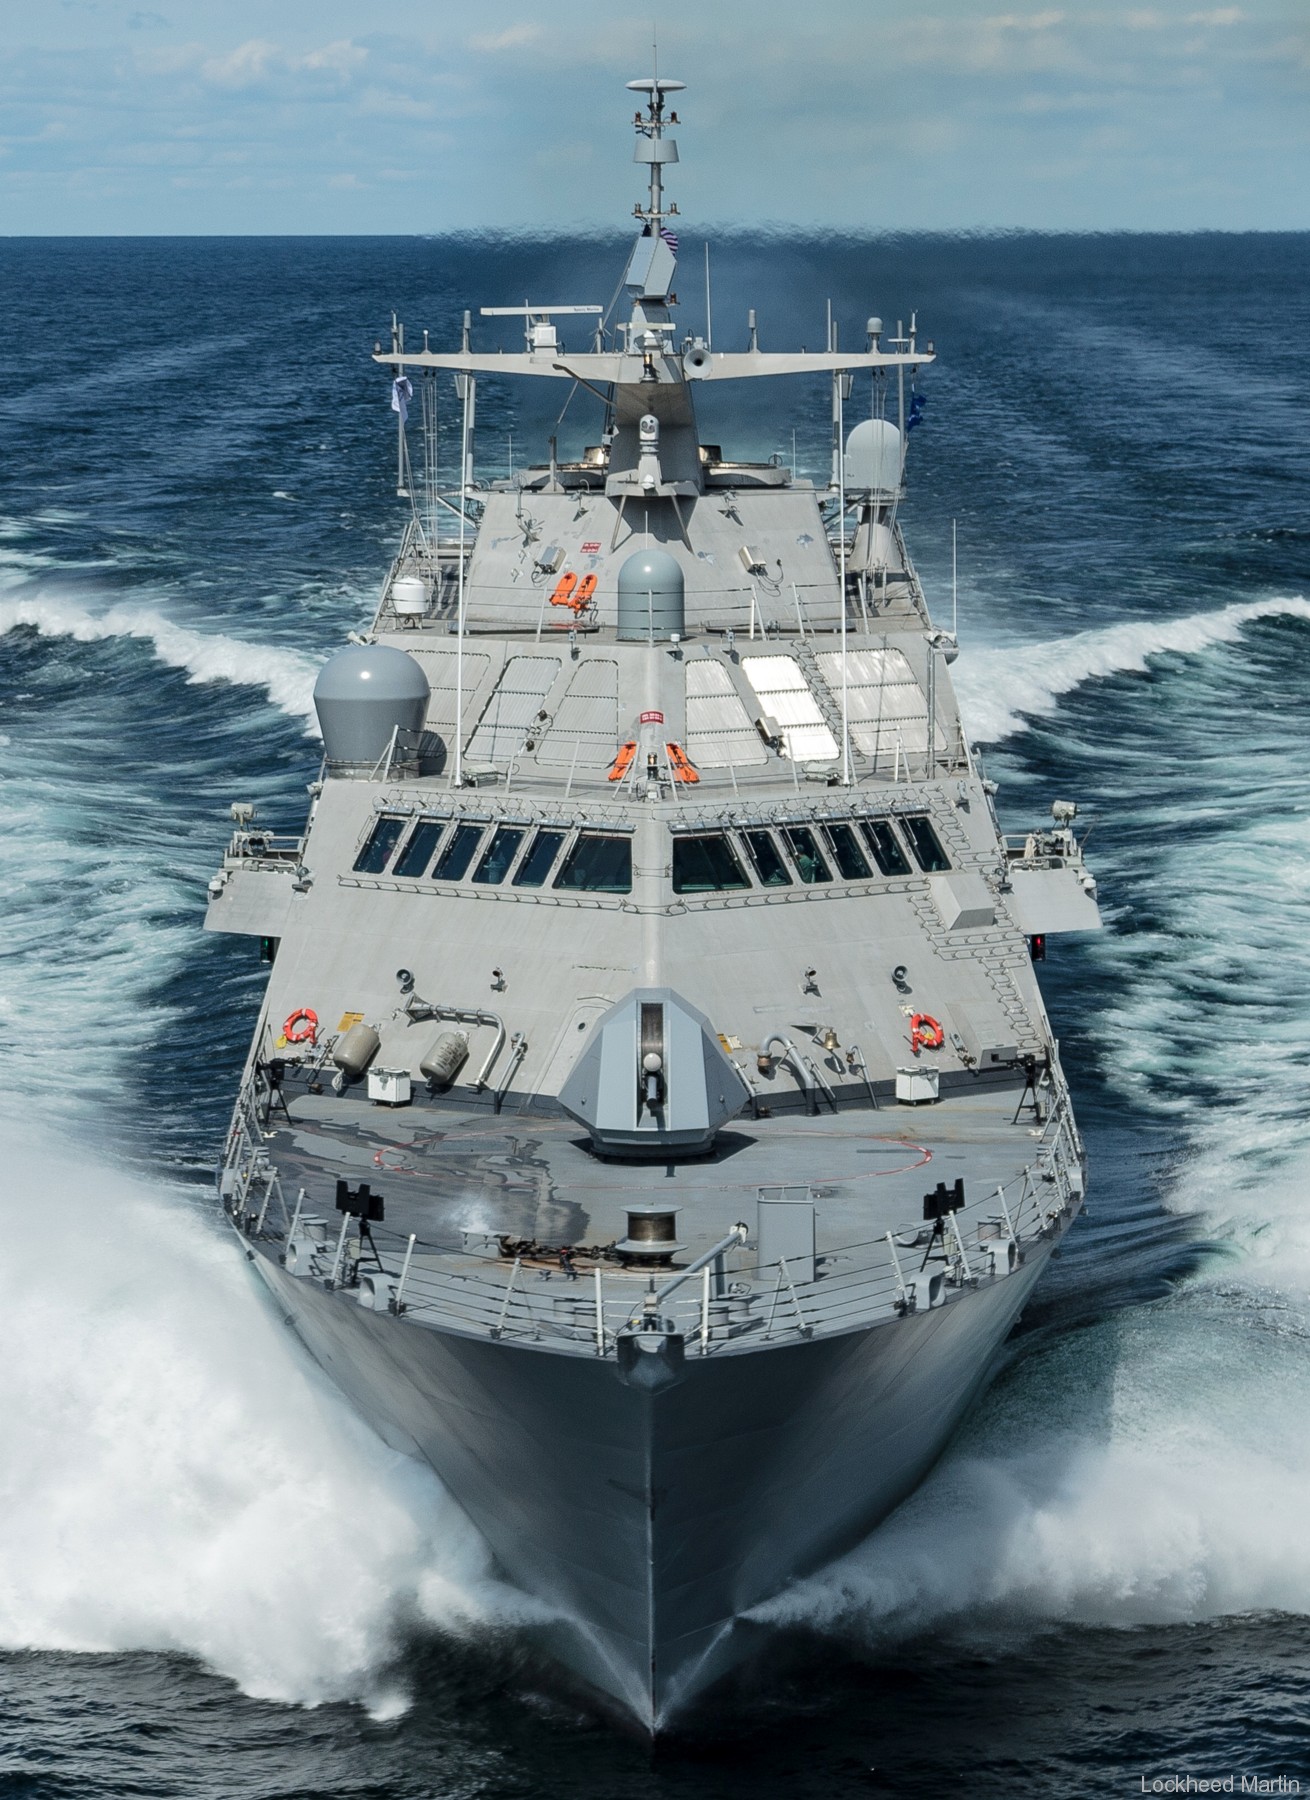 lcs-9 uss little rock freedom class littoral combat ship us navy 17 trials